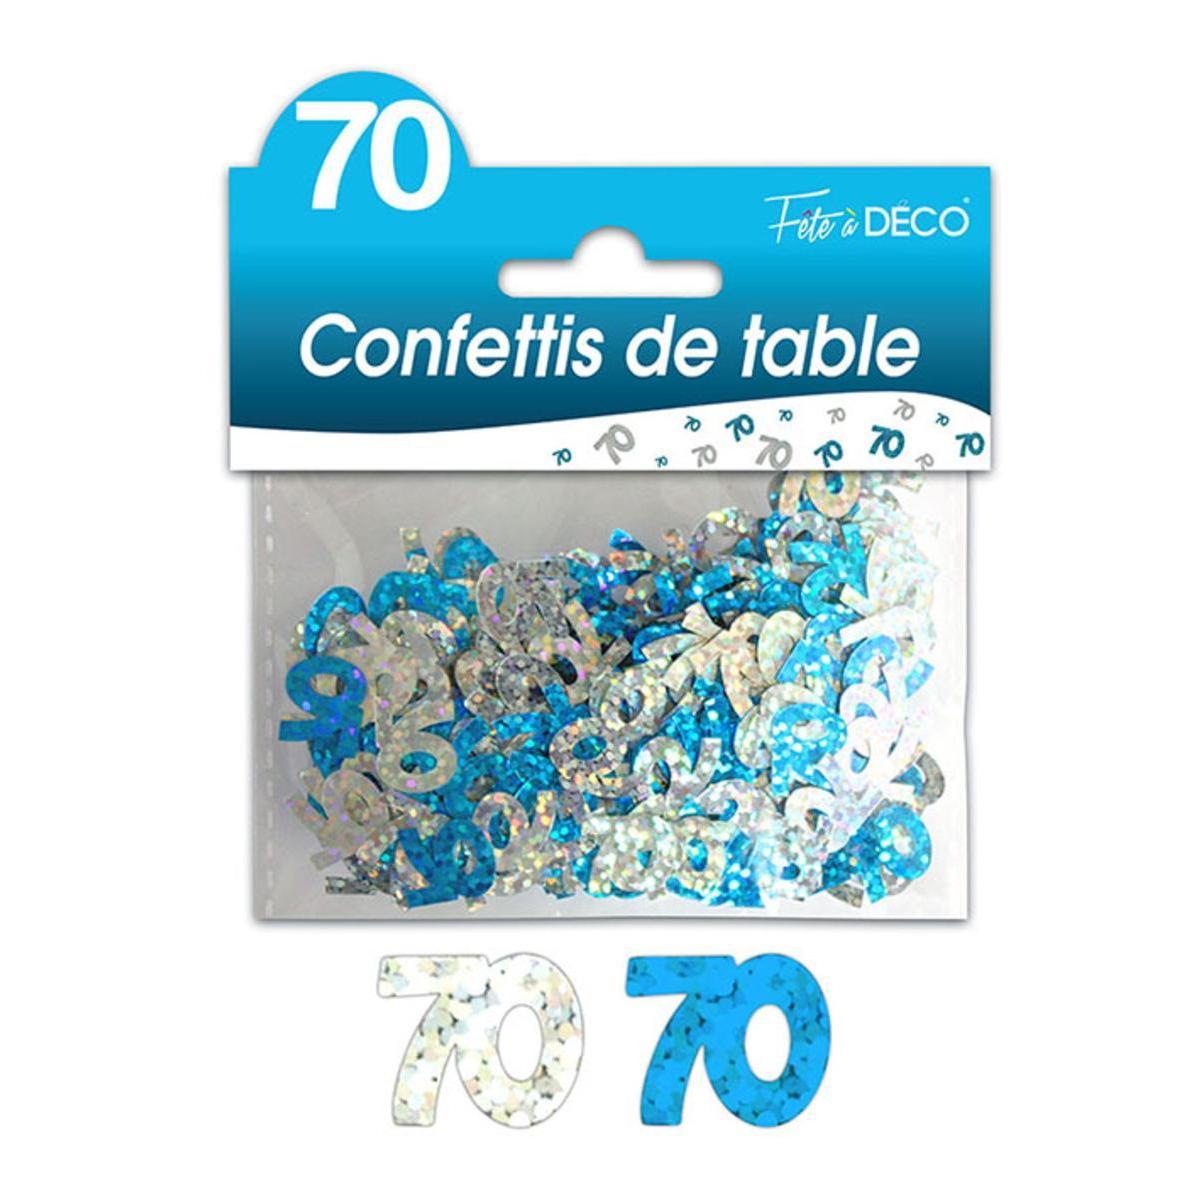 Confettis de table 70 ans hologramme - Bleu